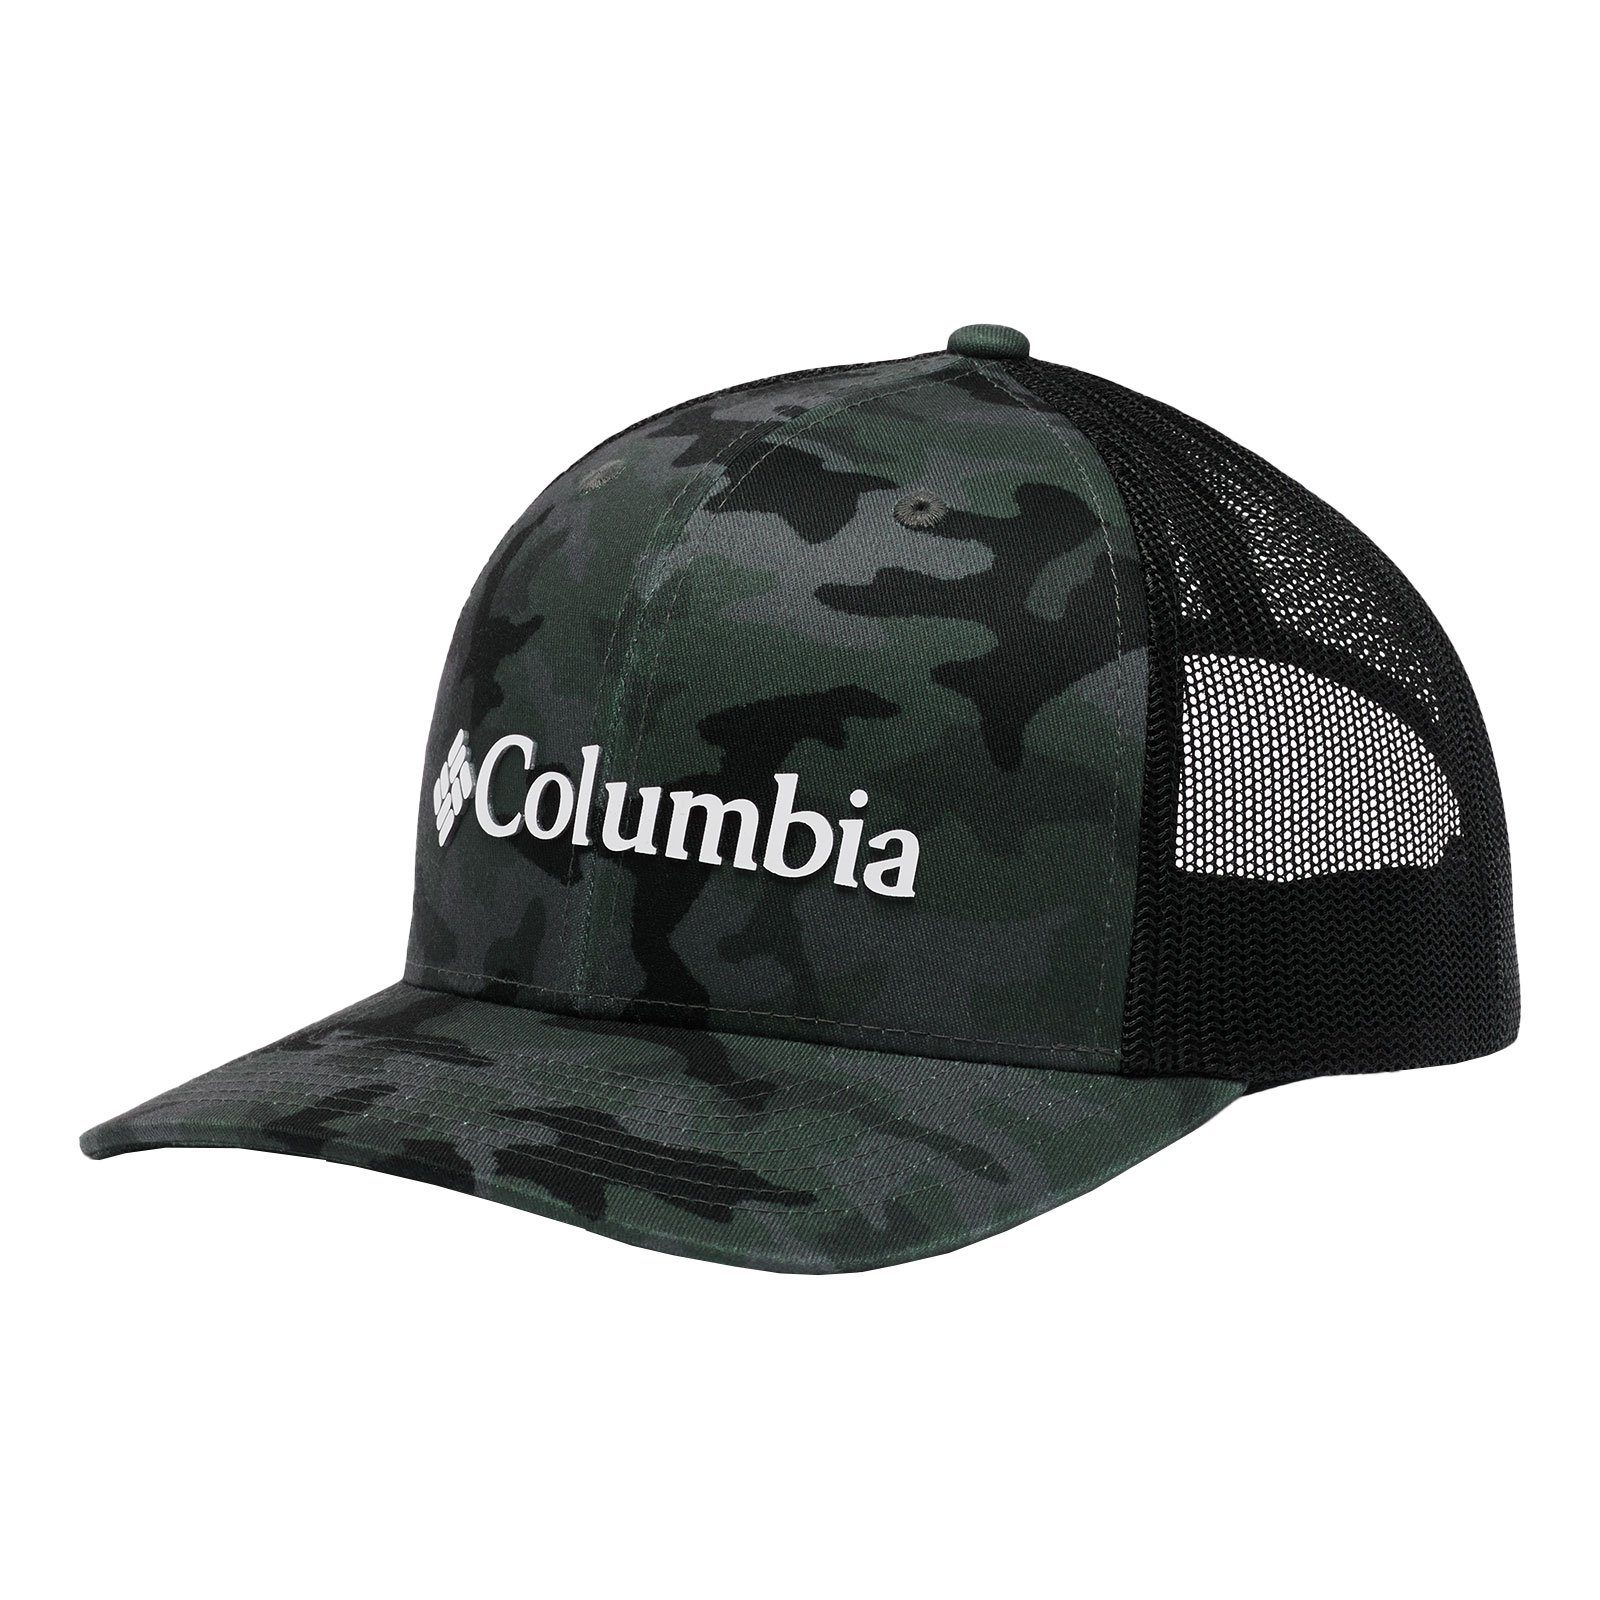 Columbia Snapback Cap Columbia aufgesetztem Mesh Snapback Schwarz Logo mit